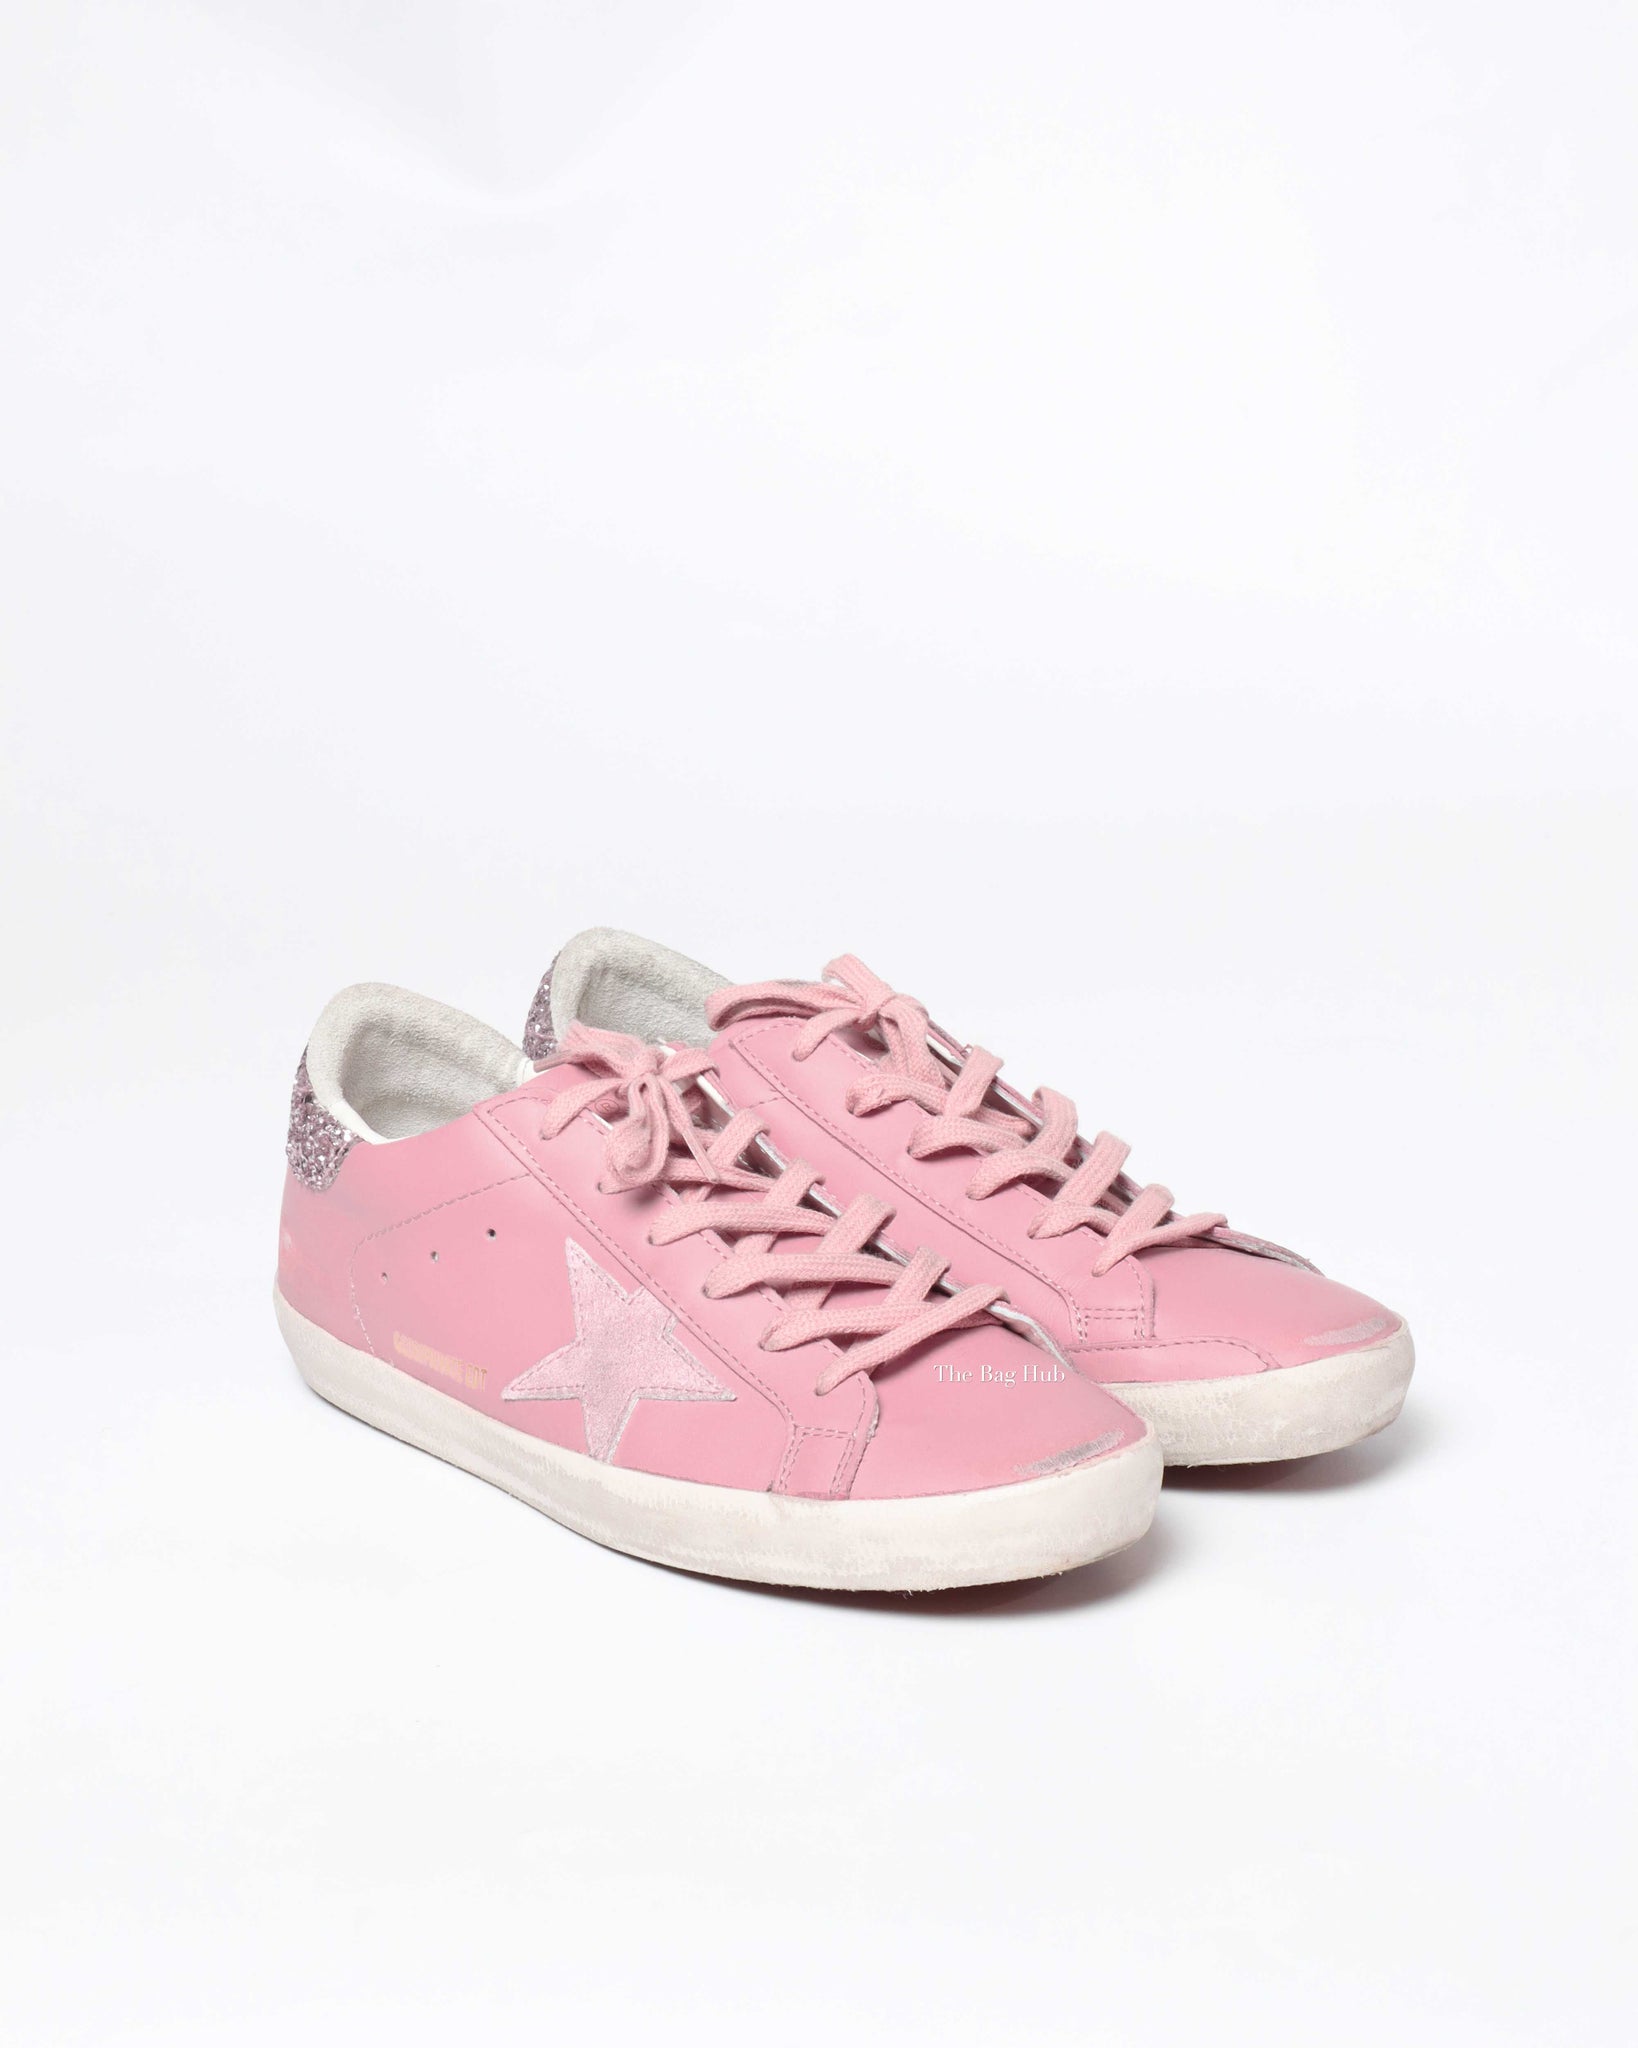 Golden Goose Antique Pink Leather w/ Glitter Heeltab Classic Superstar Sneaker Size 39-2